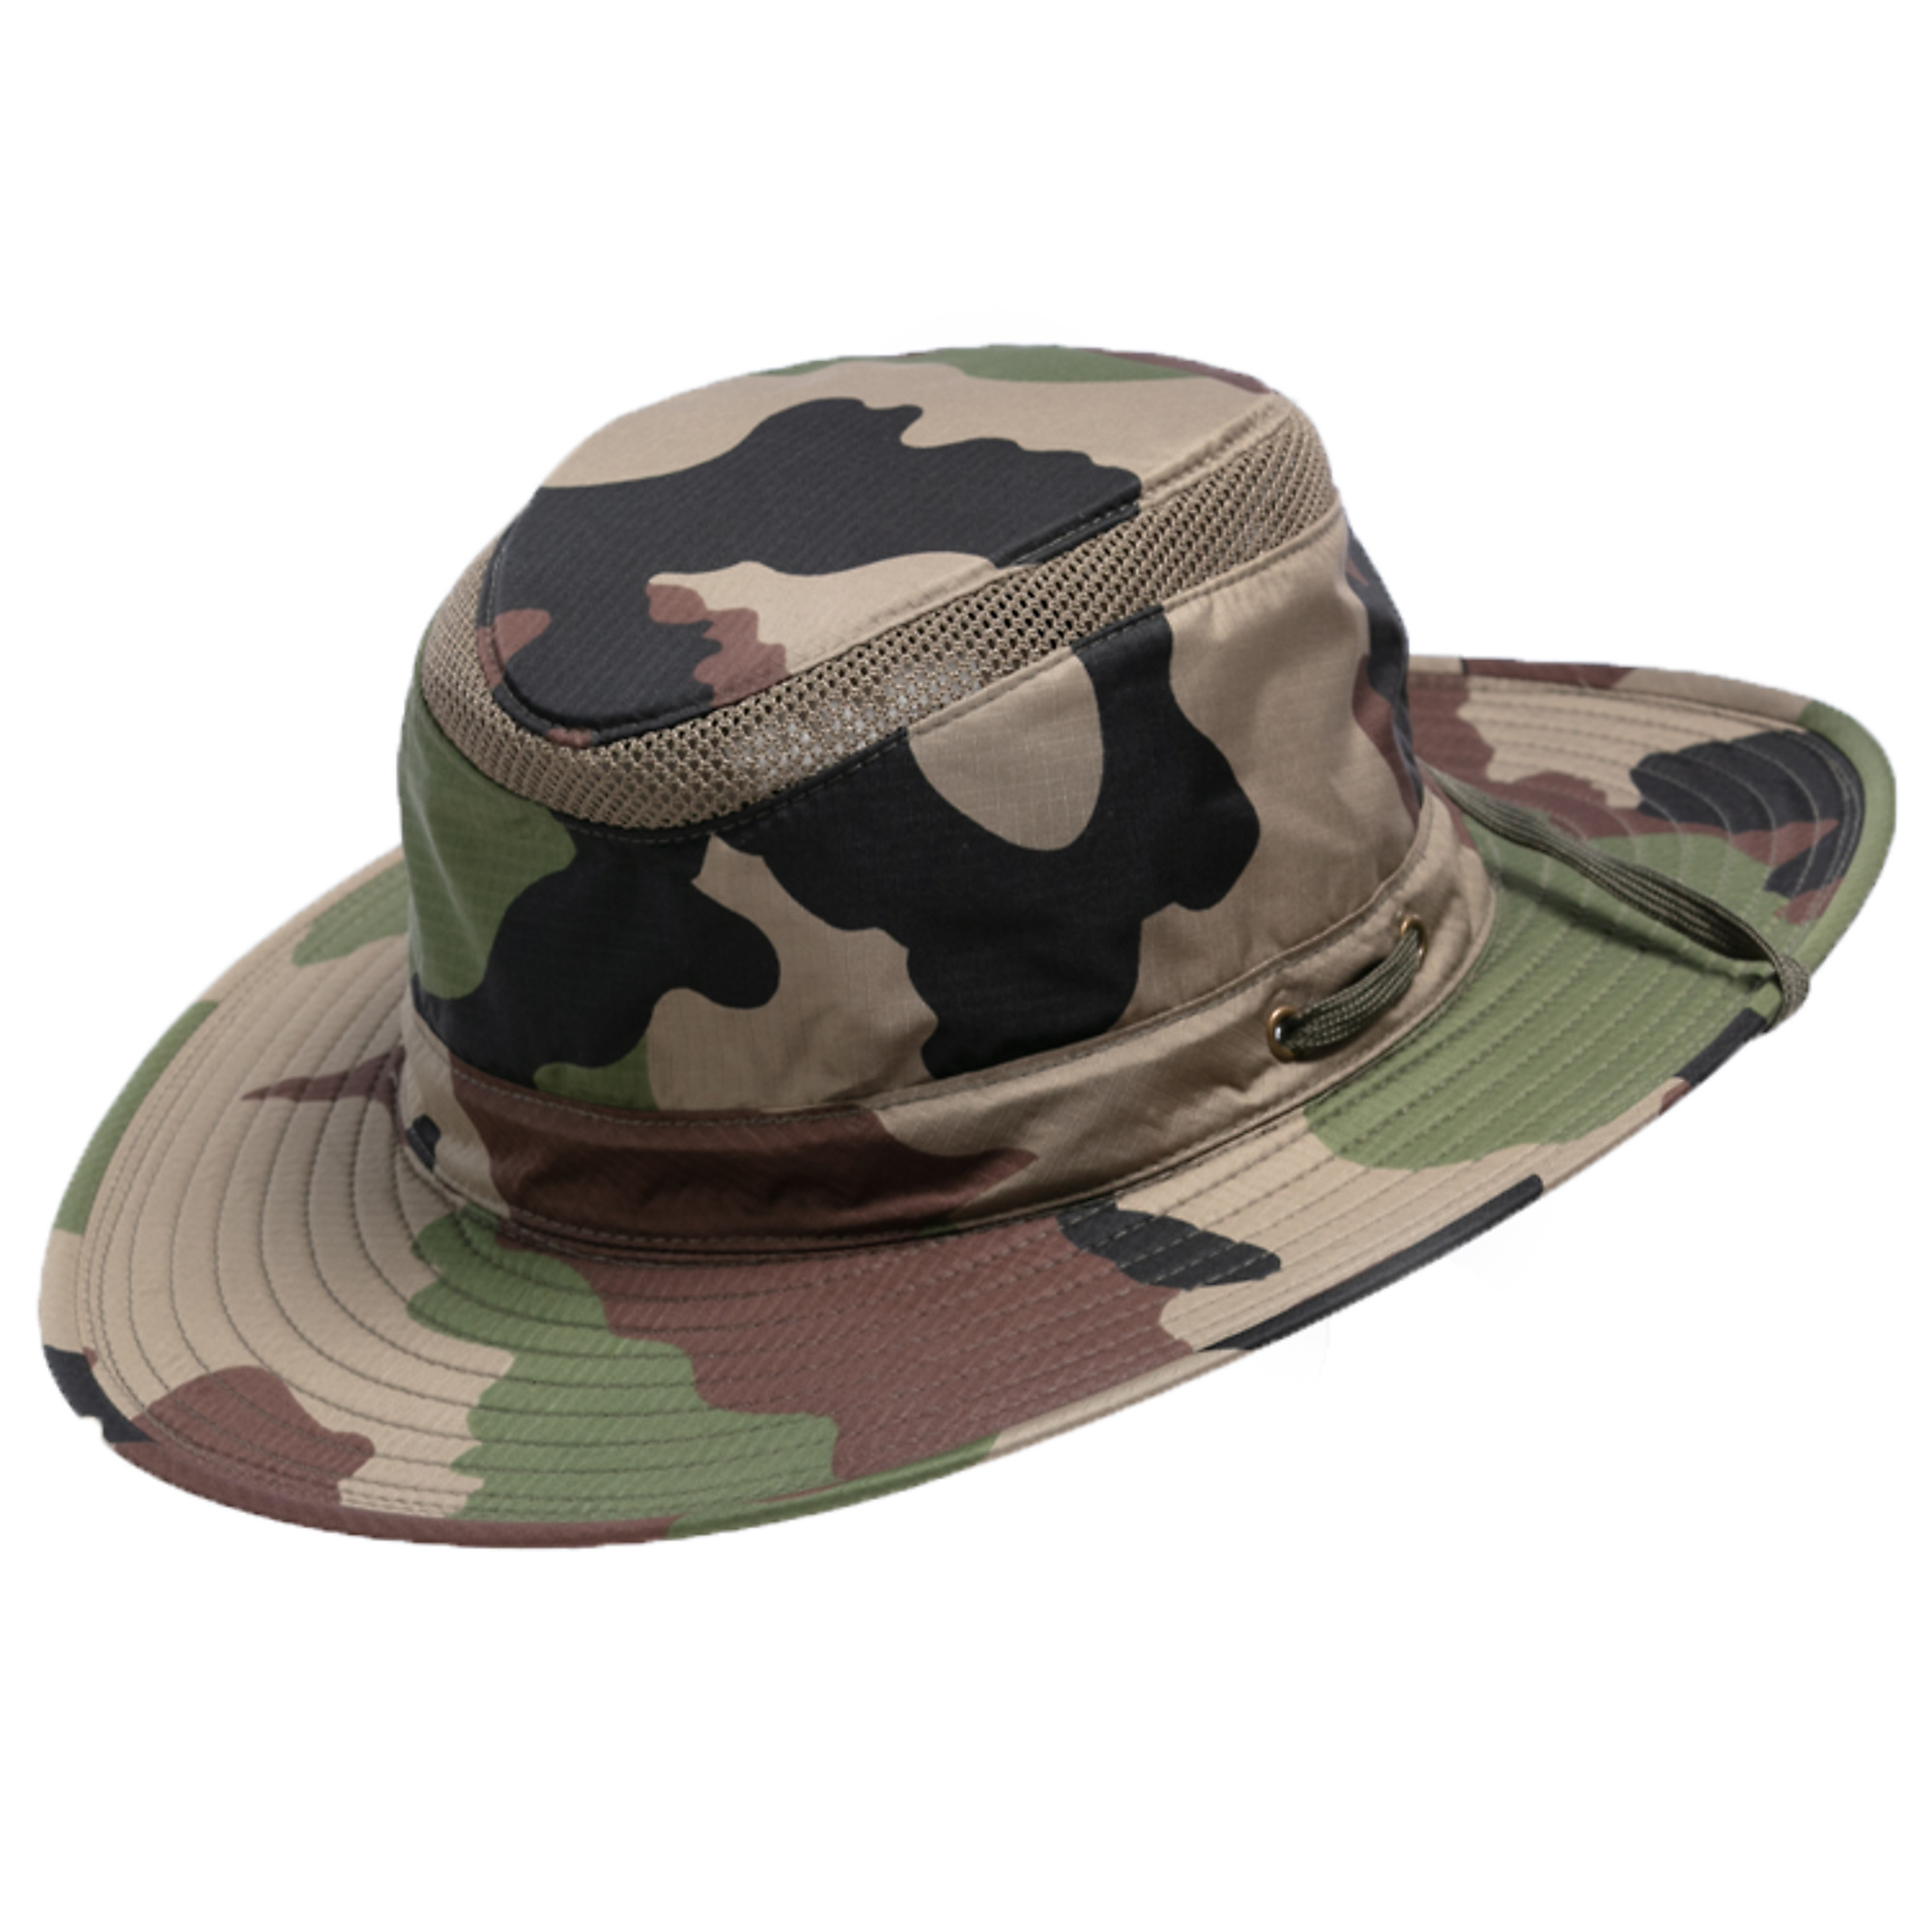 Henschel Hat Company, Woodland Camo Camper Booney Hat, Size M